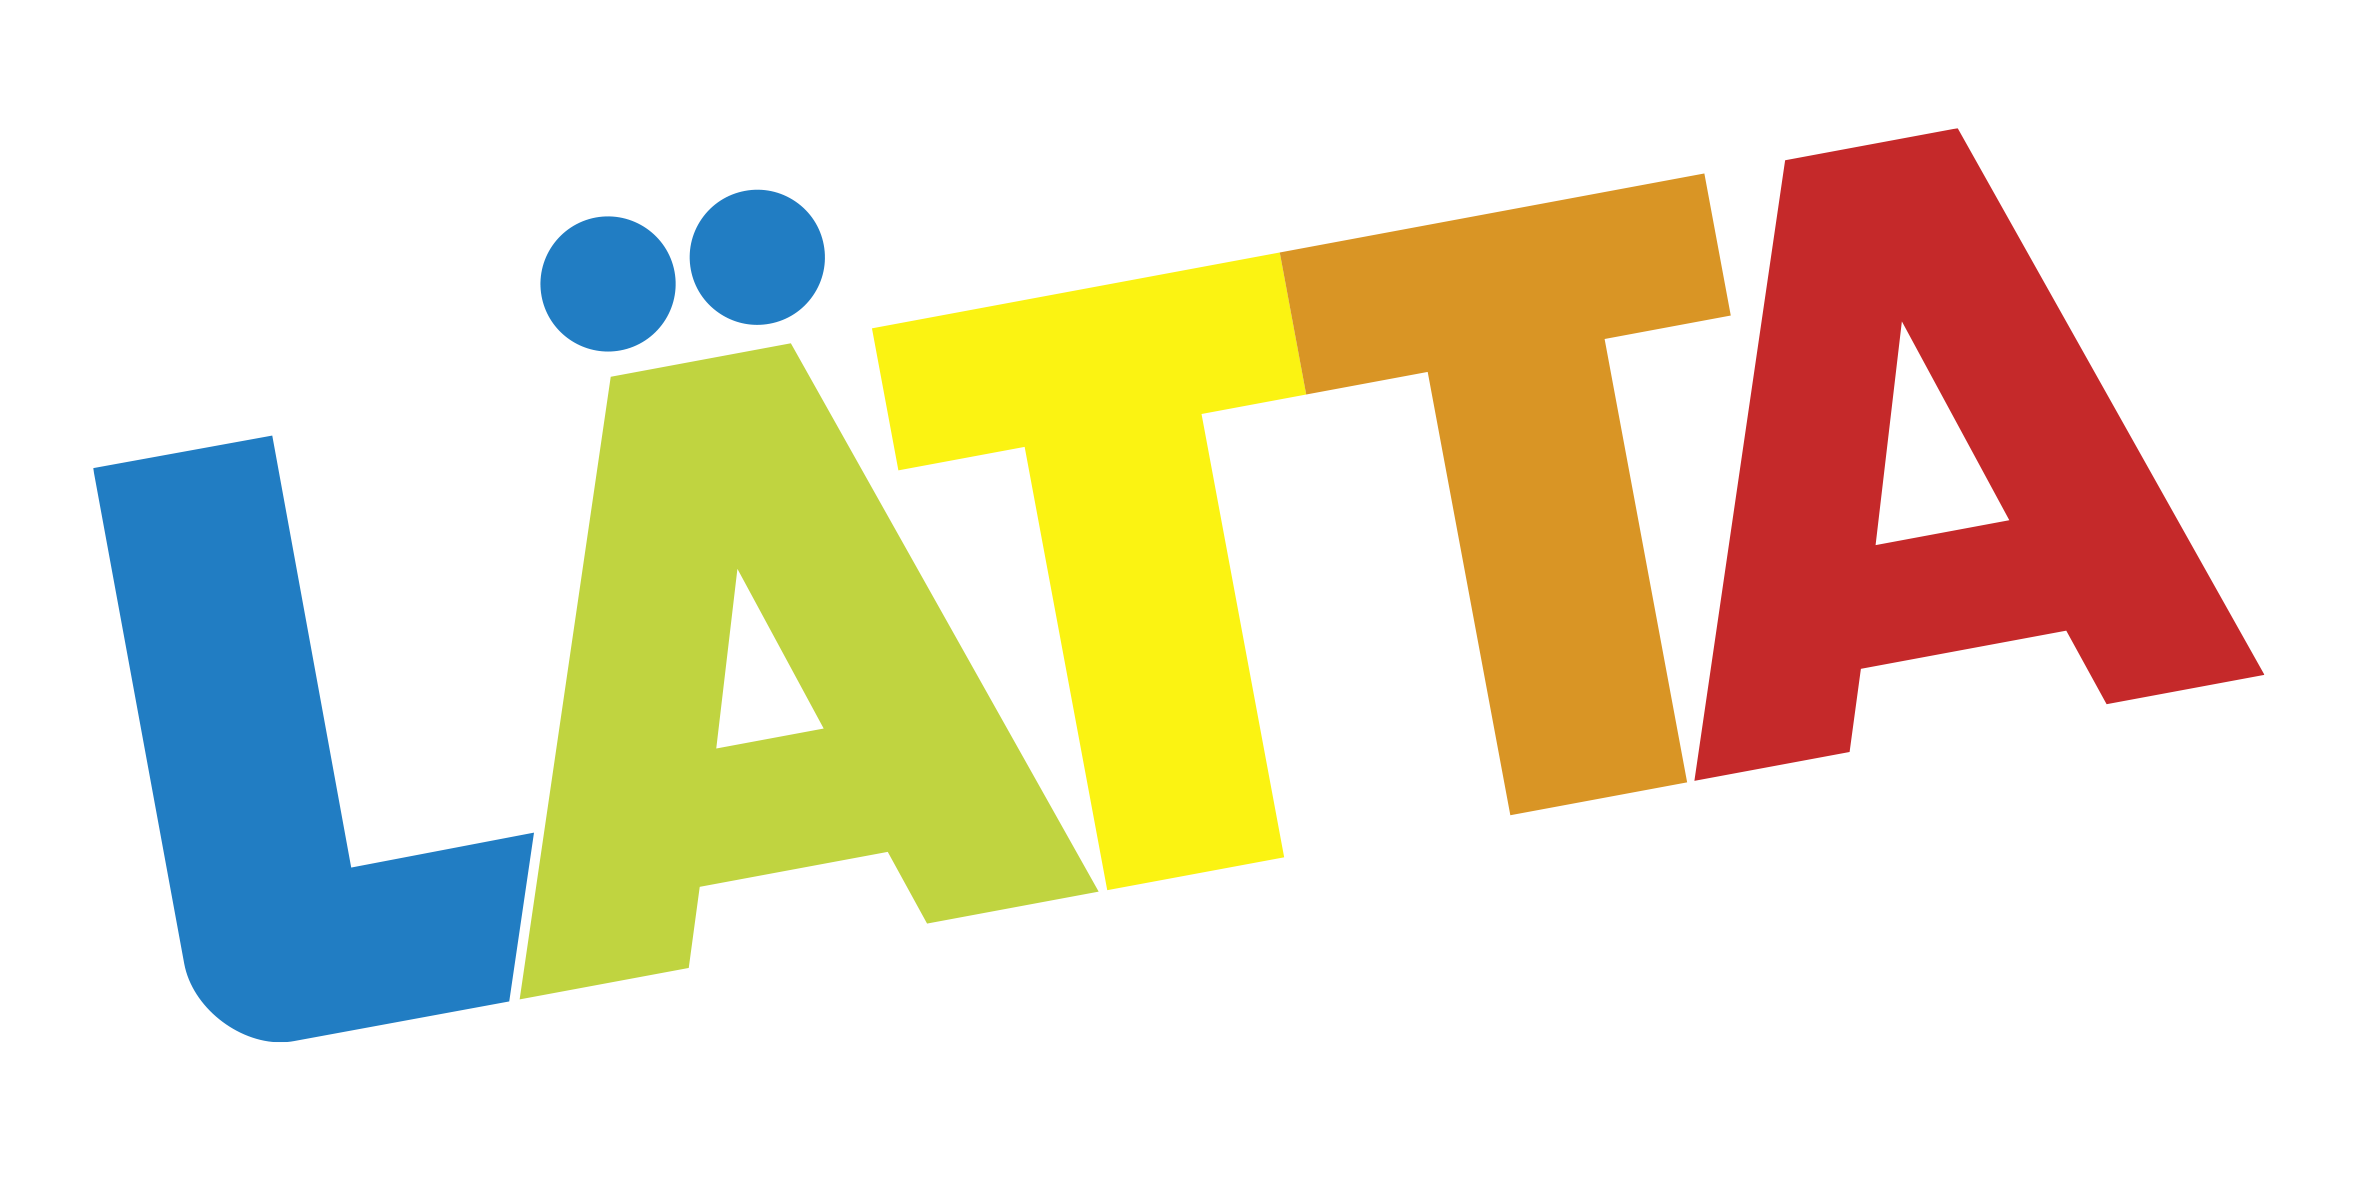 Laetta logo new